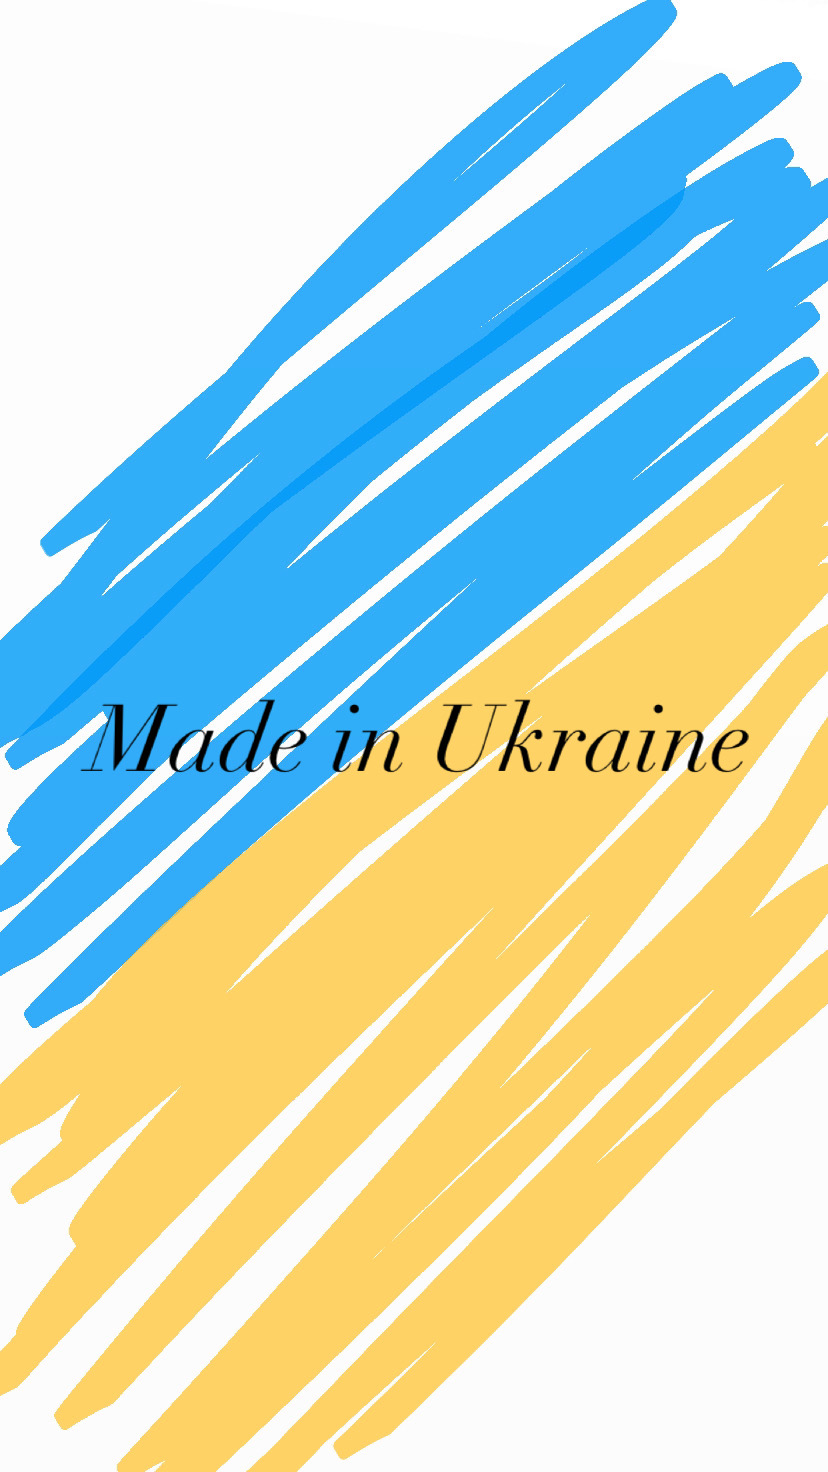 Мої улюблені українські бренди #madeinukraine